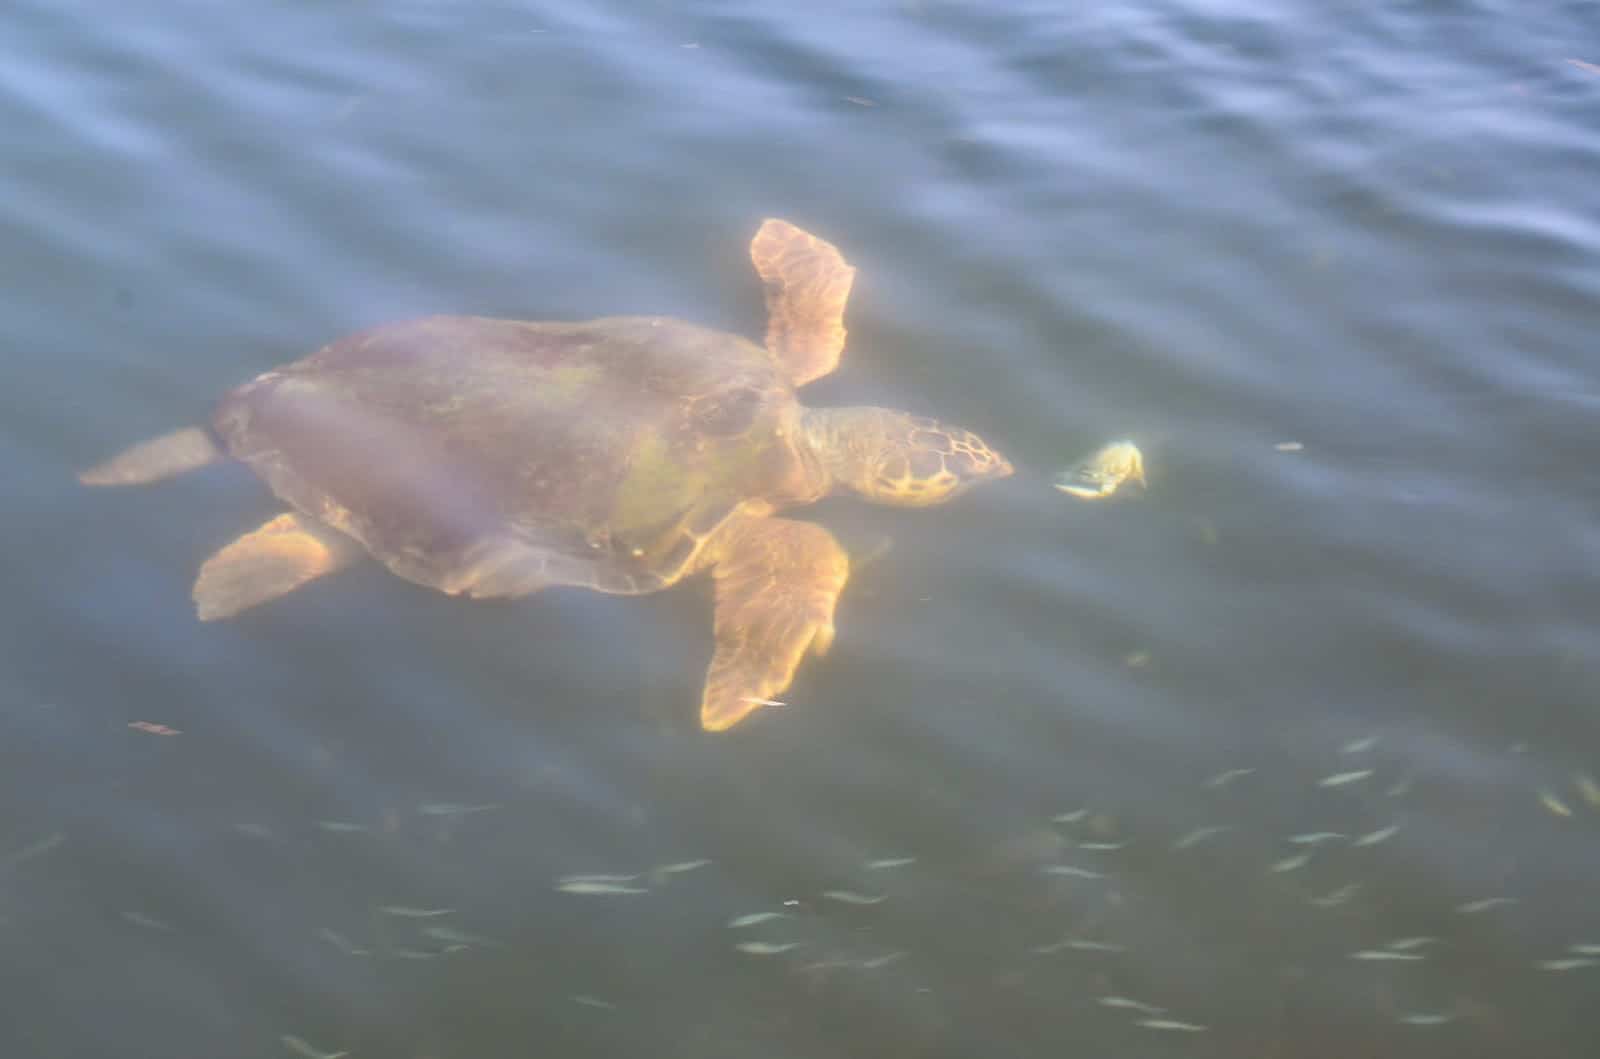 Loggerhead turtle on the Dalyan River Delta in Turkey